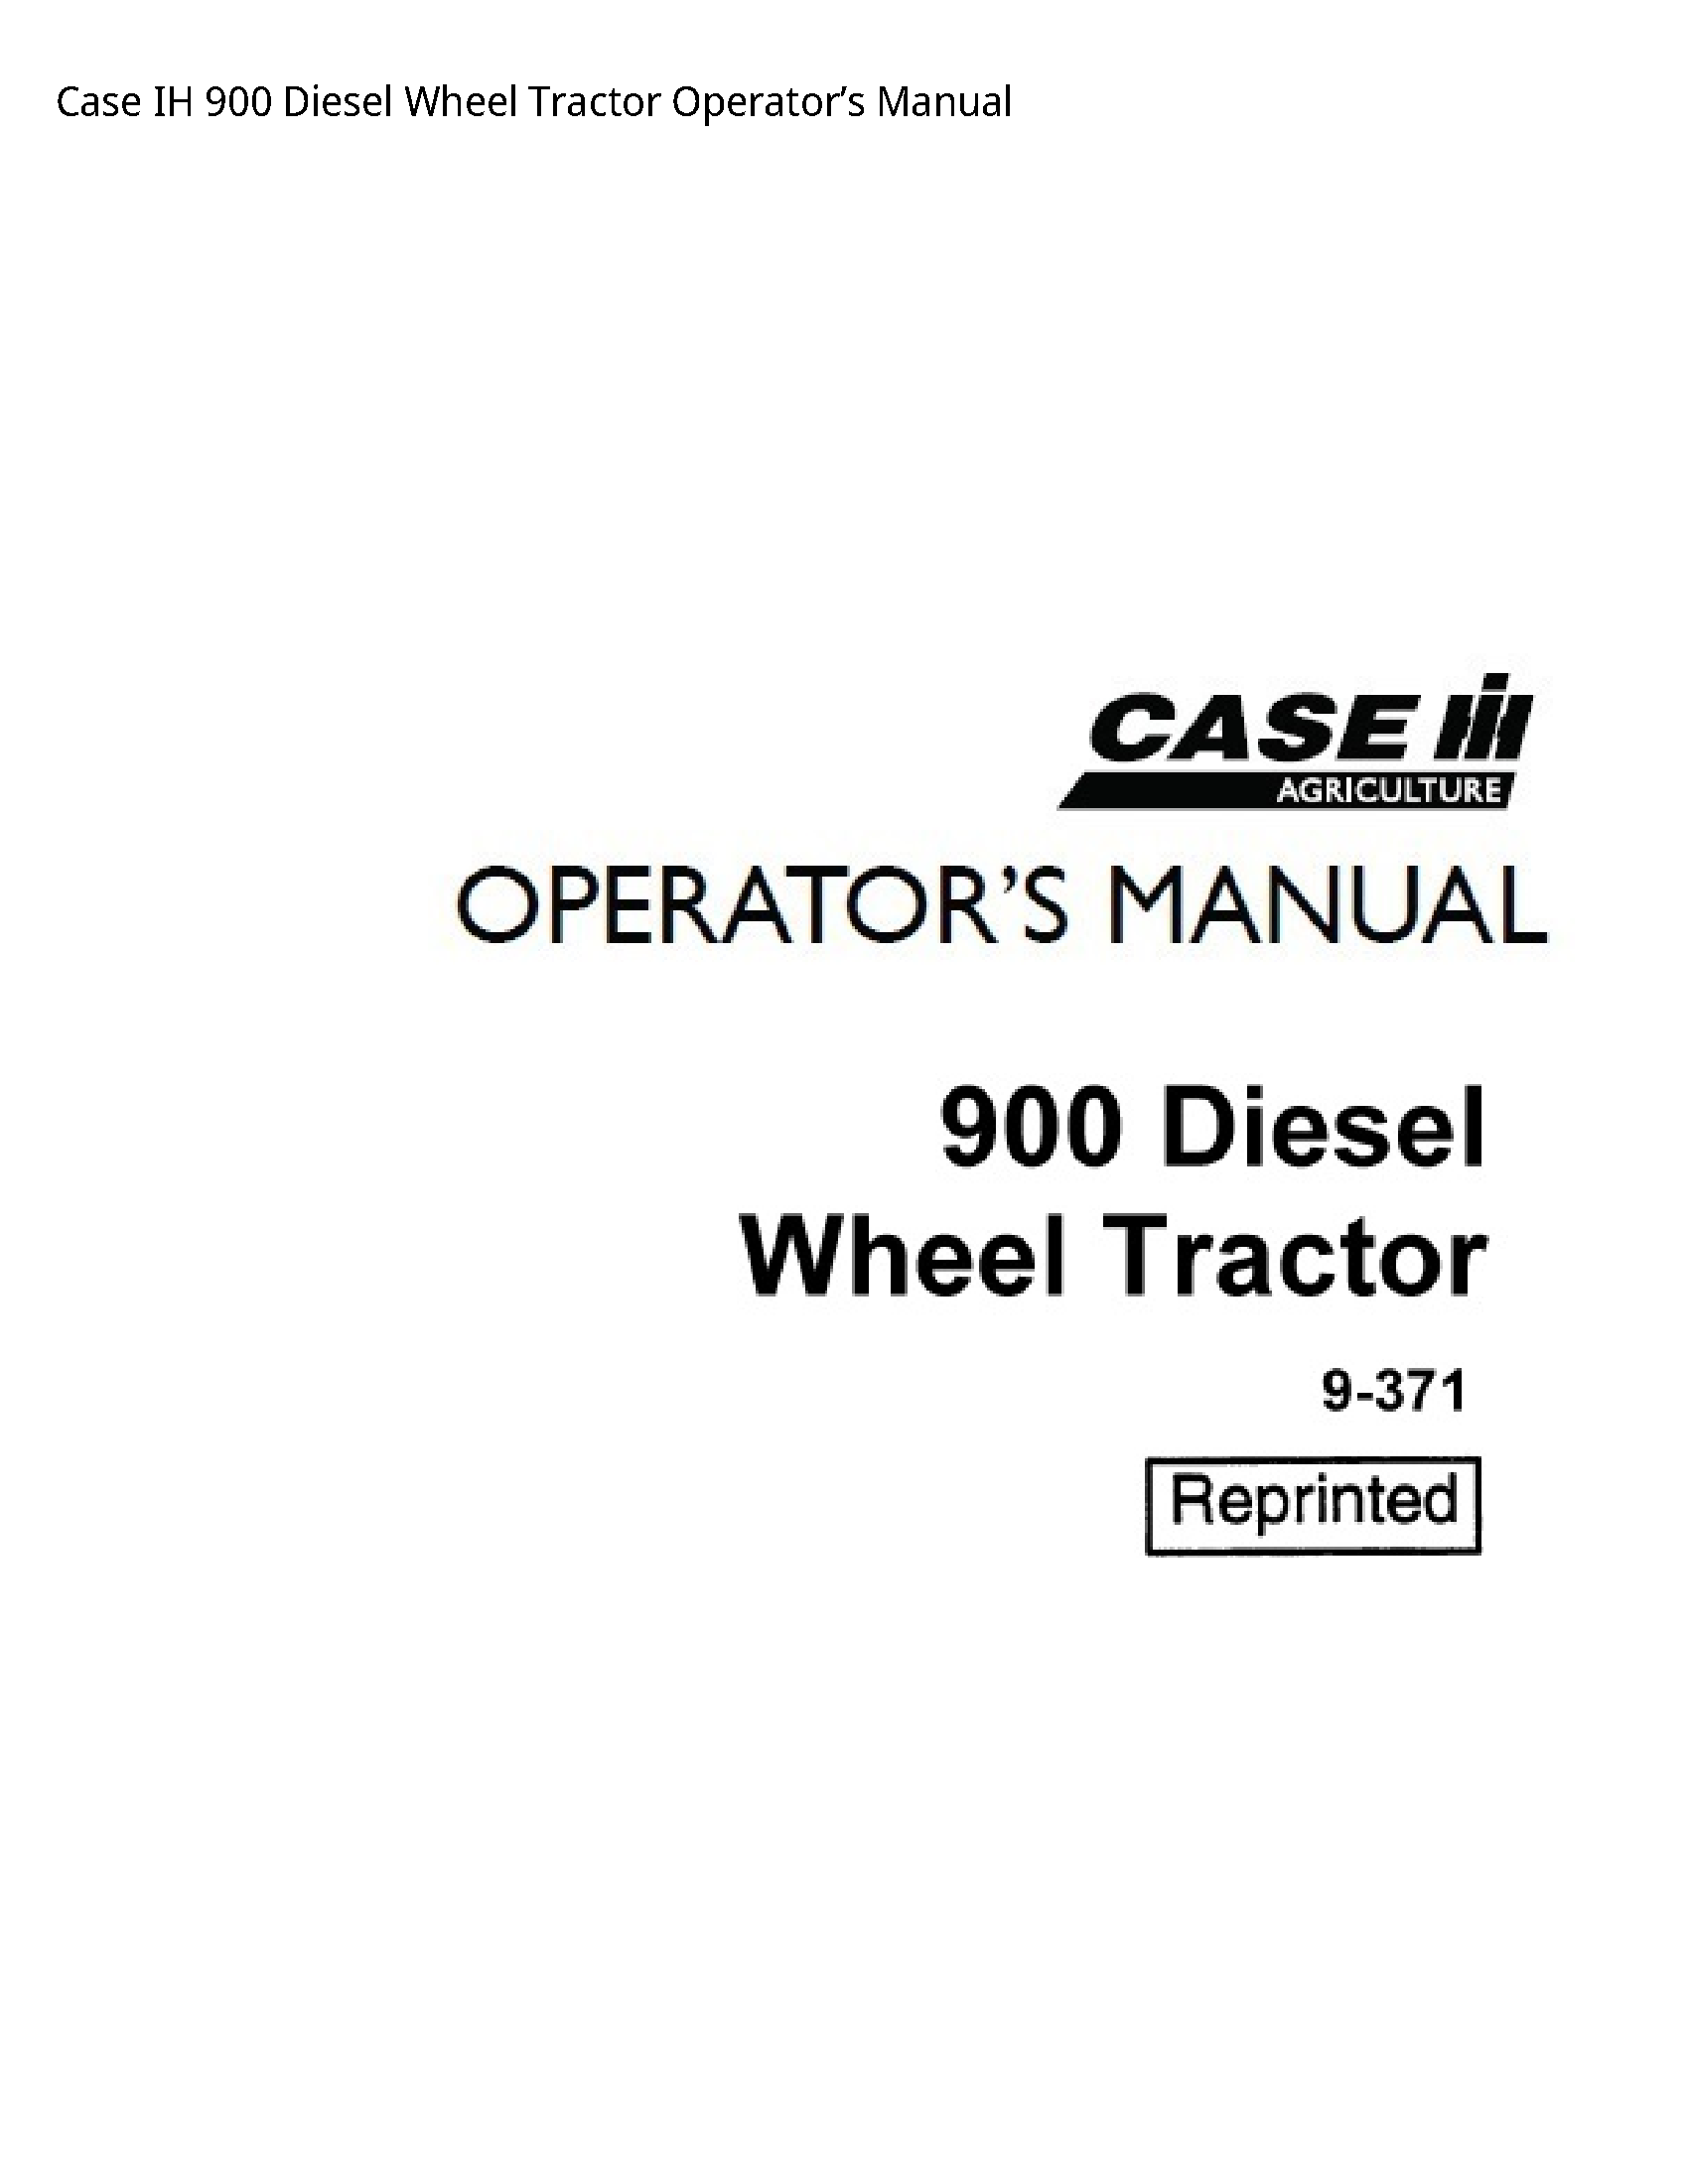 Case/Case IH 900 IH Diesel Wheel Tractor Operator’s manual